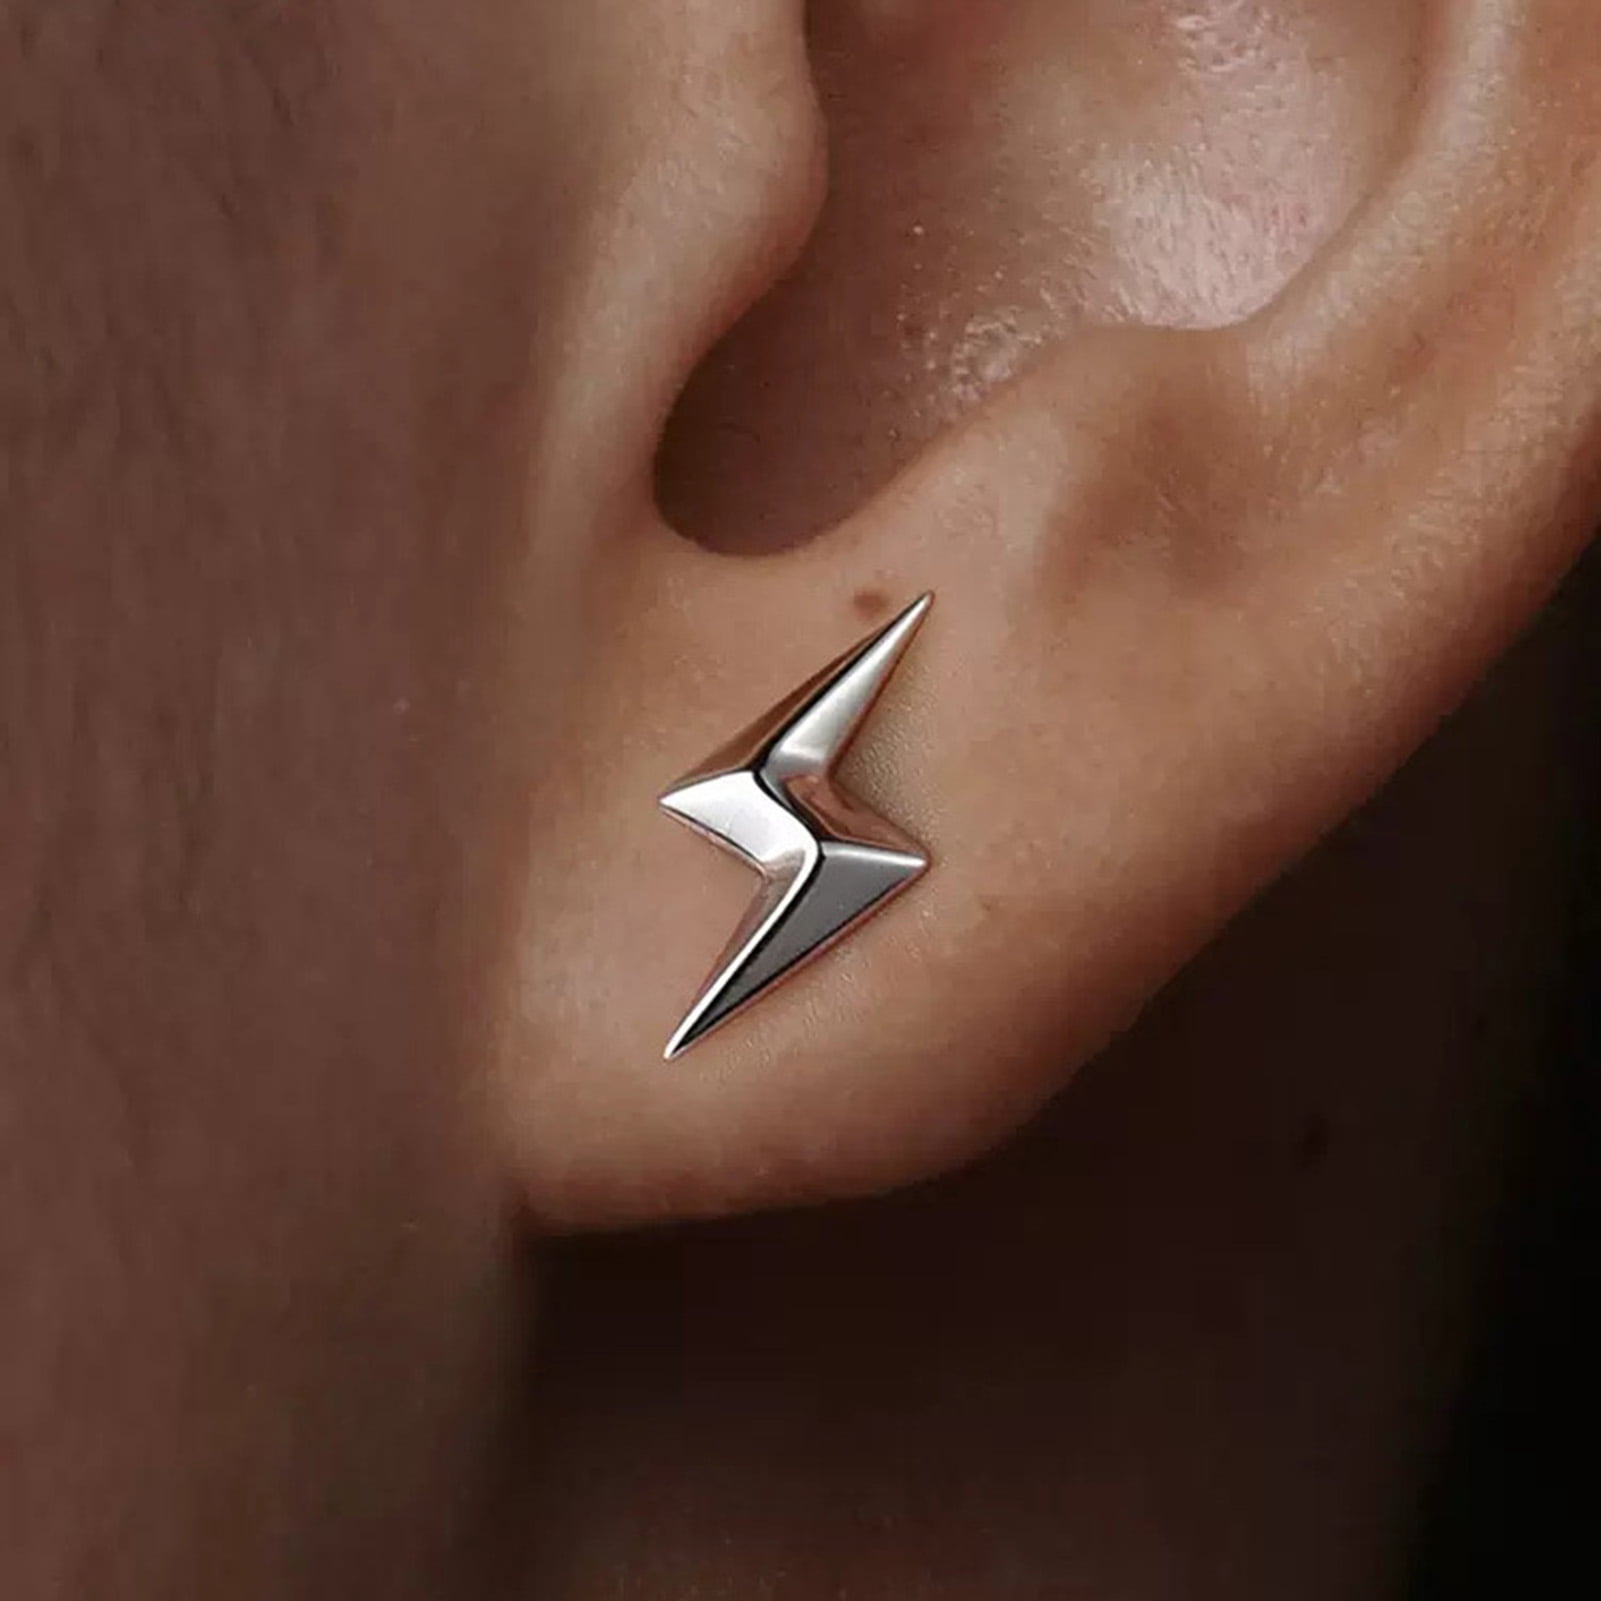 Hesroicy 1Pc 1 Pair Ear Studs Personality High Grade Three dimensional Piercing Geometric Decorative Nickel Free Cool Men Earrings Jewelry Accessory a6f6a668 e6a7 48d8 90d2 05ee50c40b53.a1650f22566af28babb21ec6f061de0f